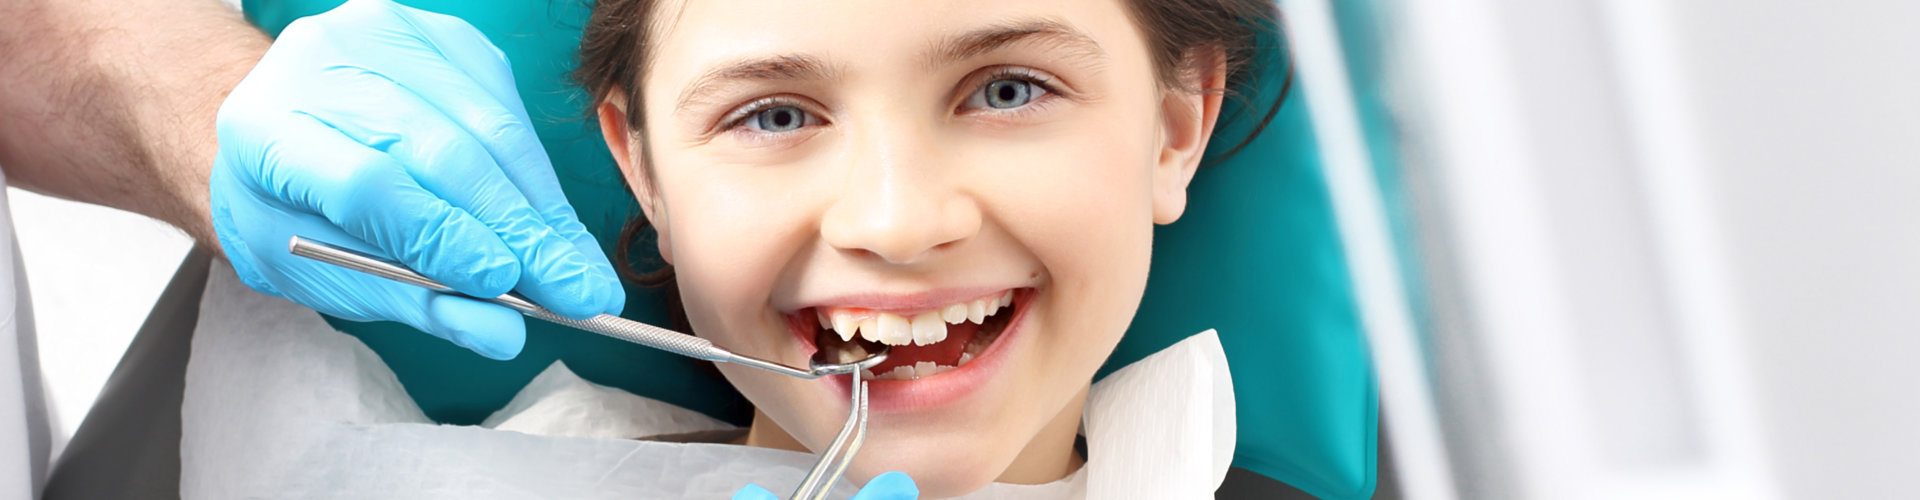 little girl smiling during dental operation